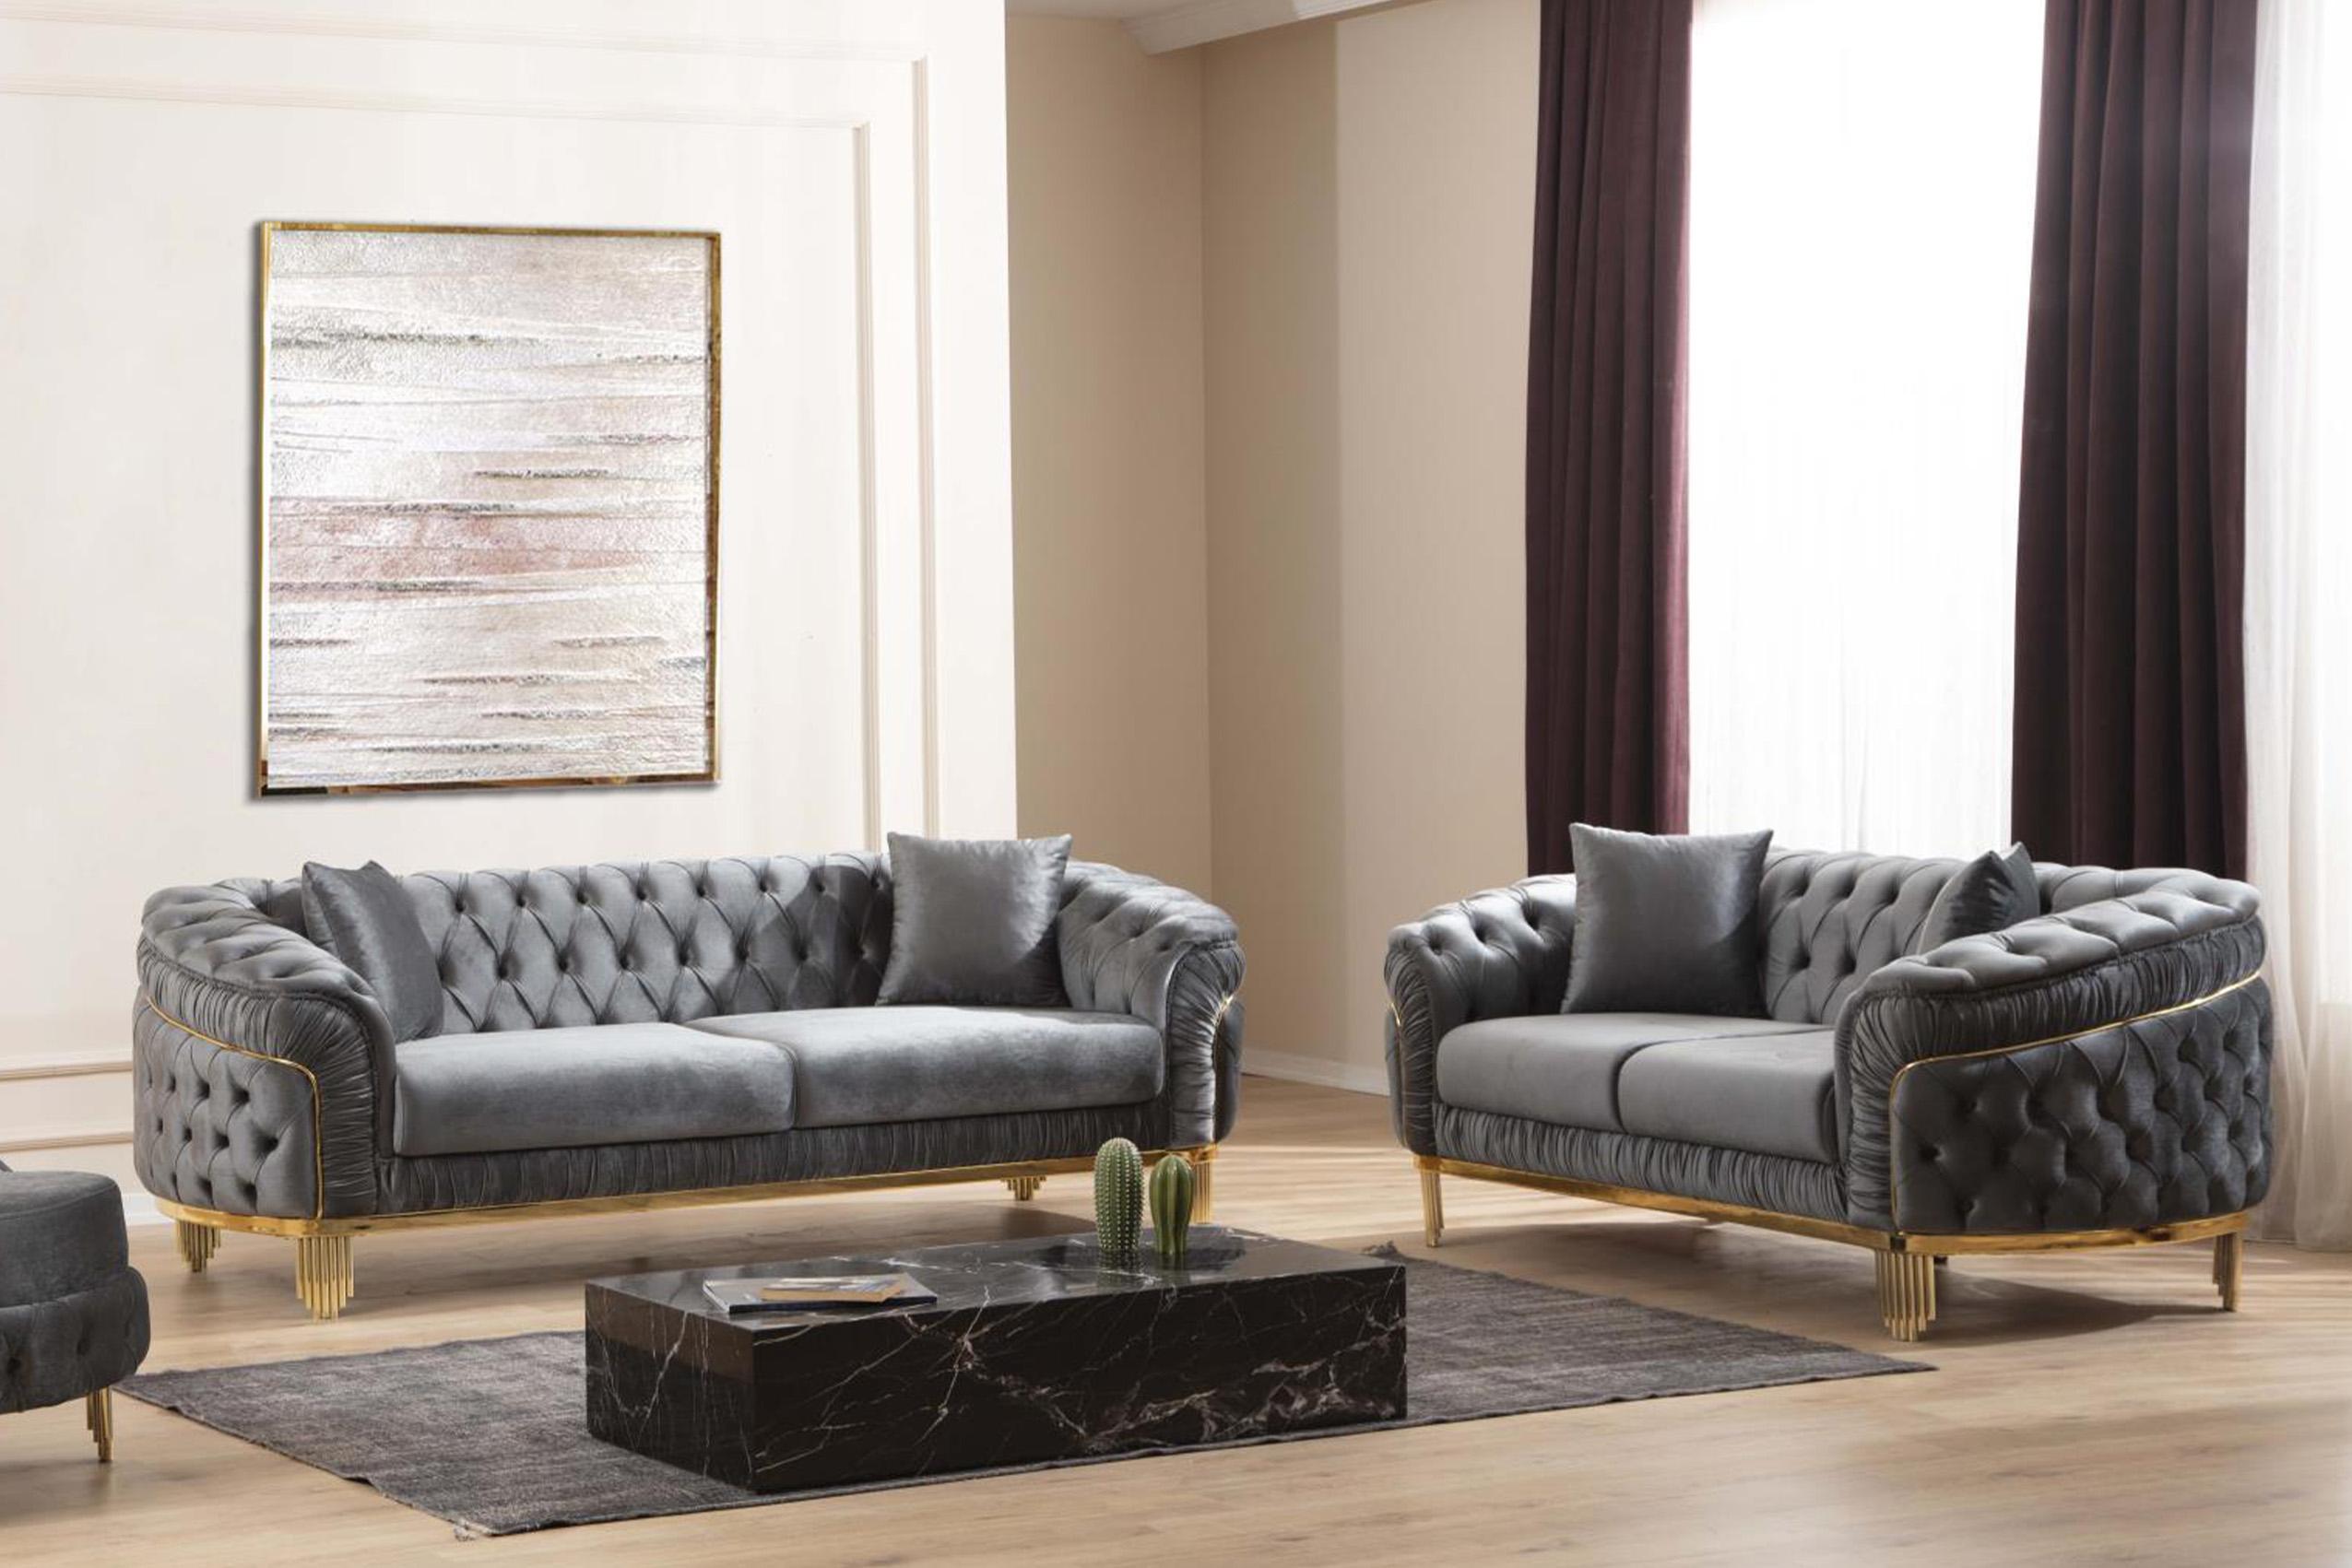 Outlet Furniture Alpha Steel – Velvet online 2Pcs Grey Sofa Legs on Furniture Barcelona buy Set NY Contemporary